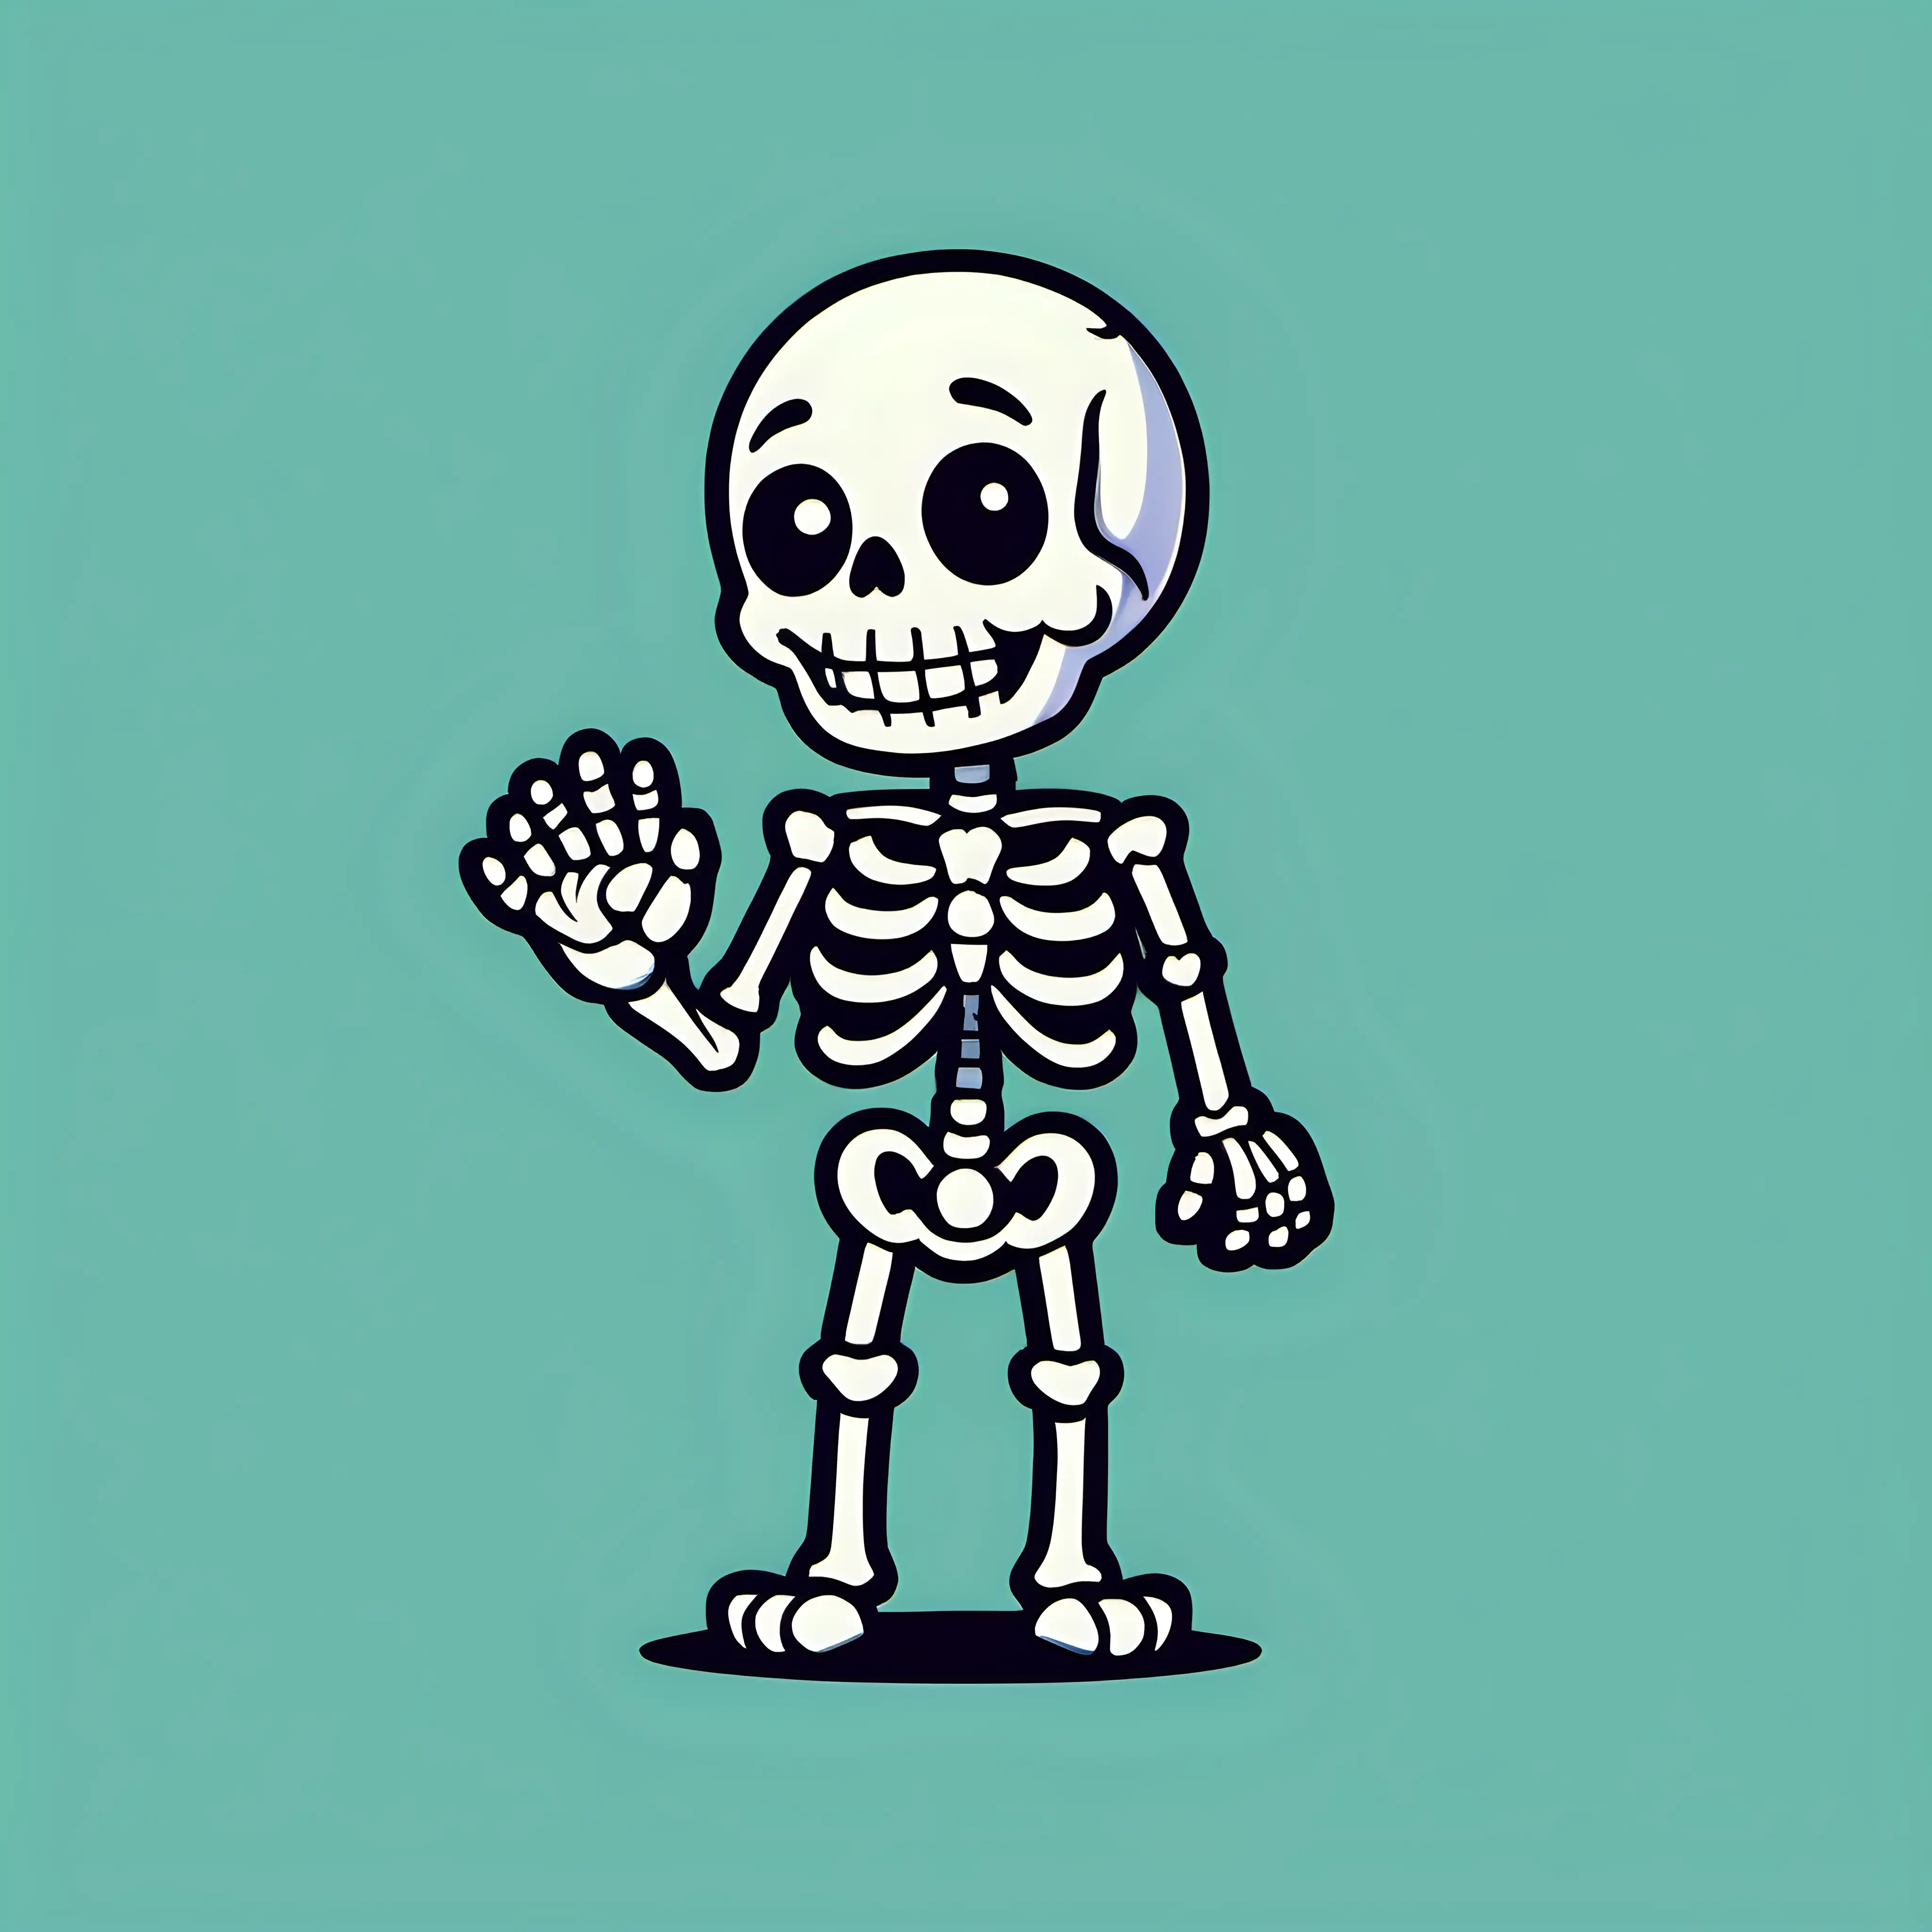 Cute Skeleton waving hello. Emote style.